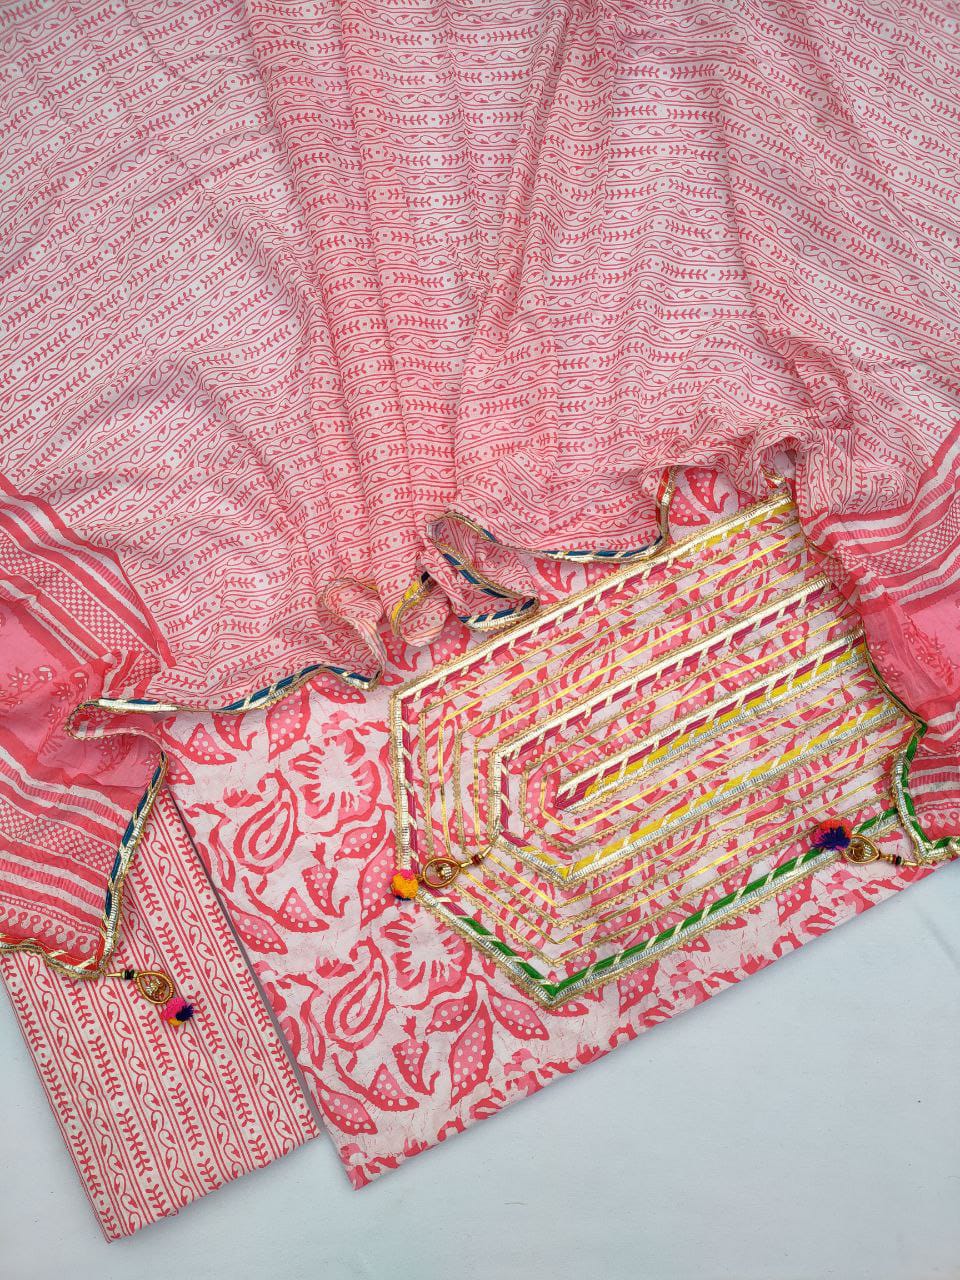 Jaipuri Cotton Hand Block Printed Gota Patti Suit with Cotton Dupatta- JBGP219